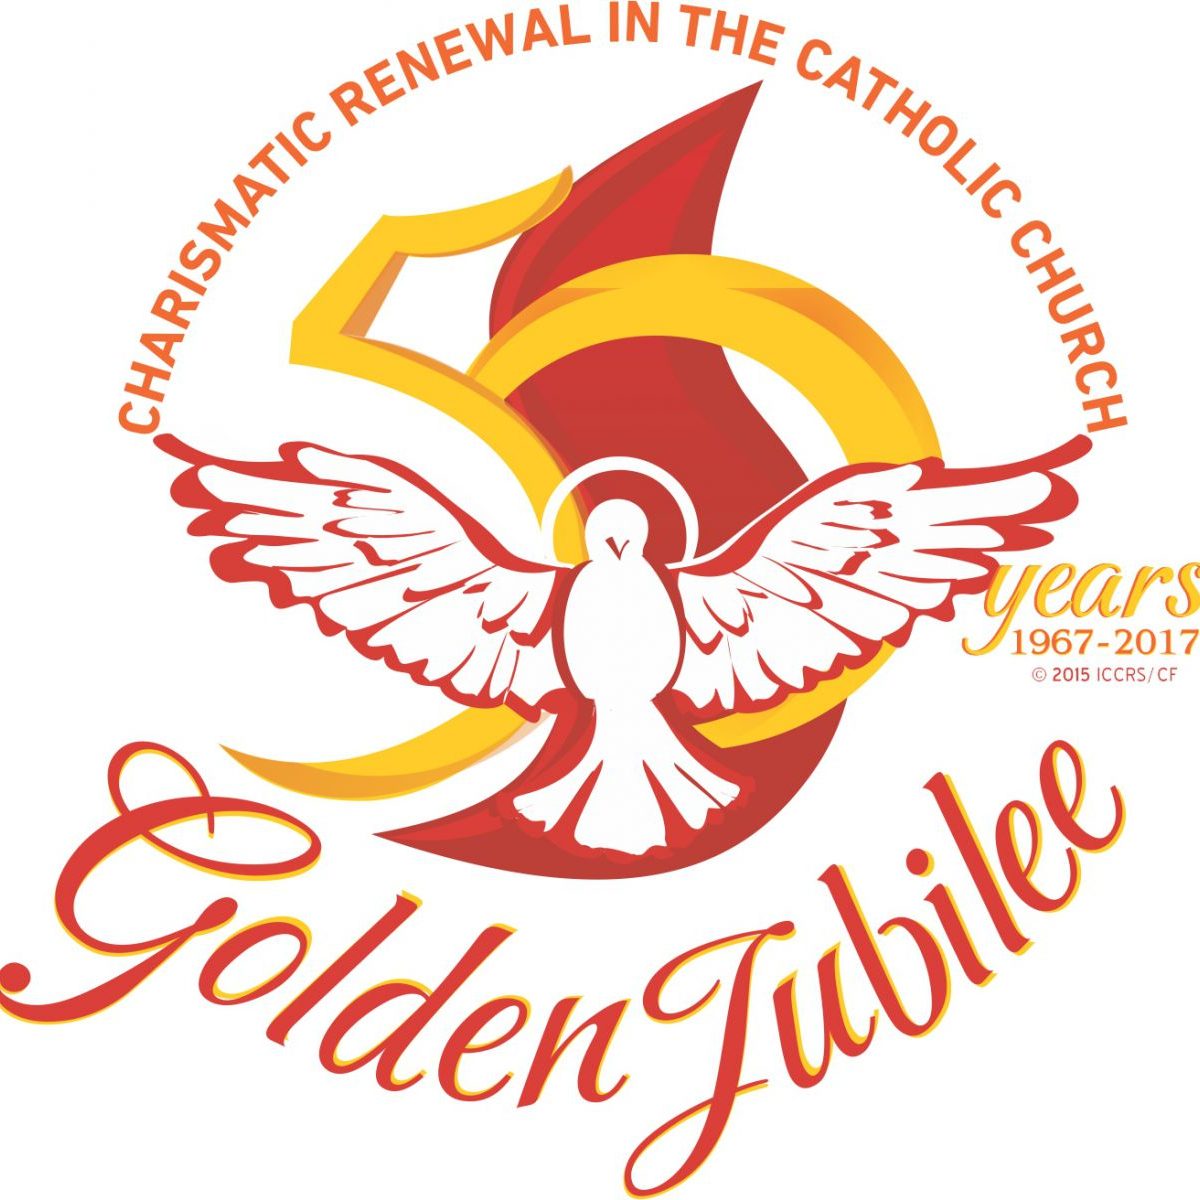 Golden Jubilee of the Catholic Charismatic Renewal